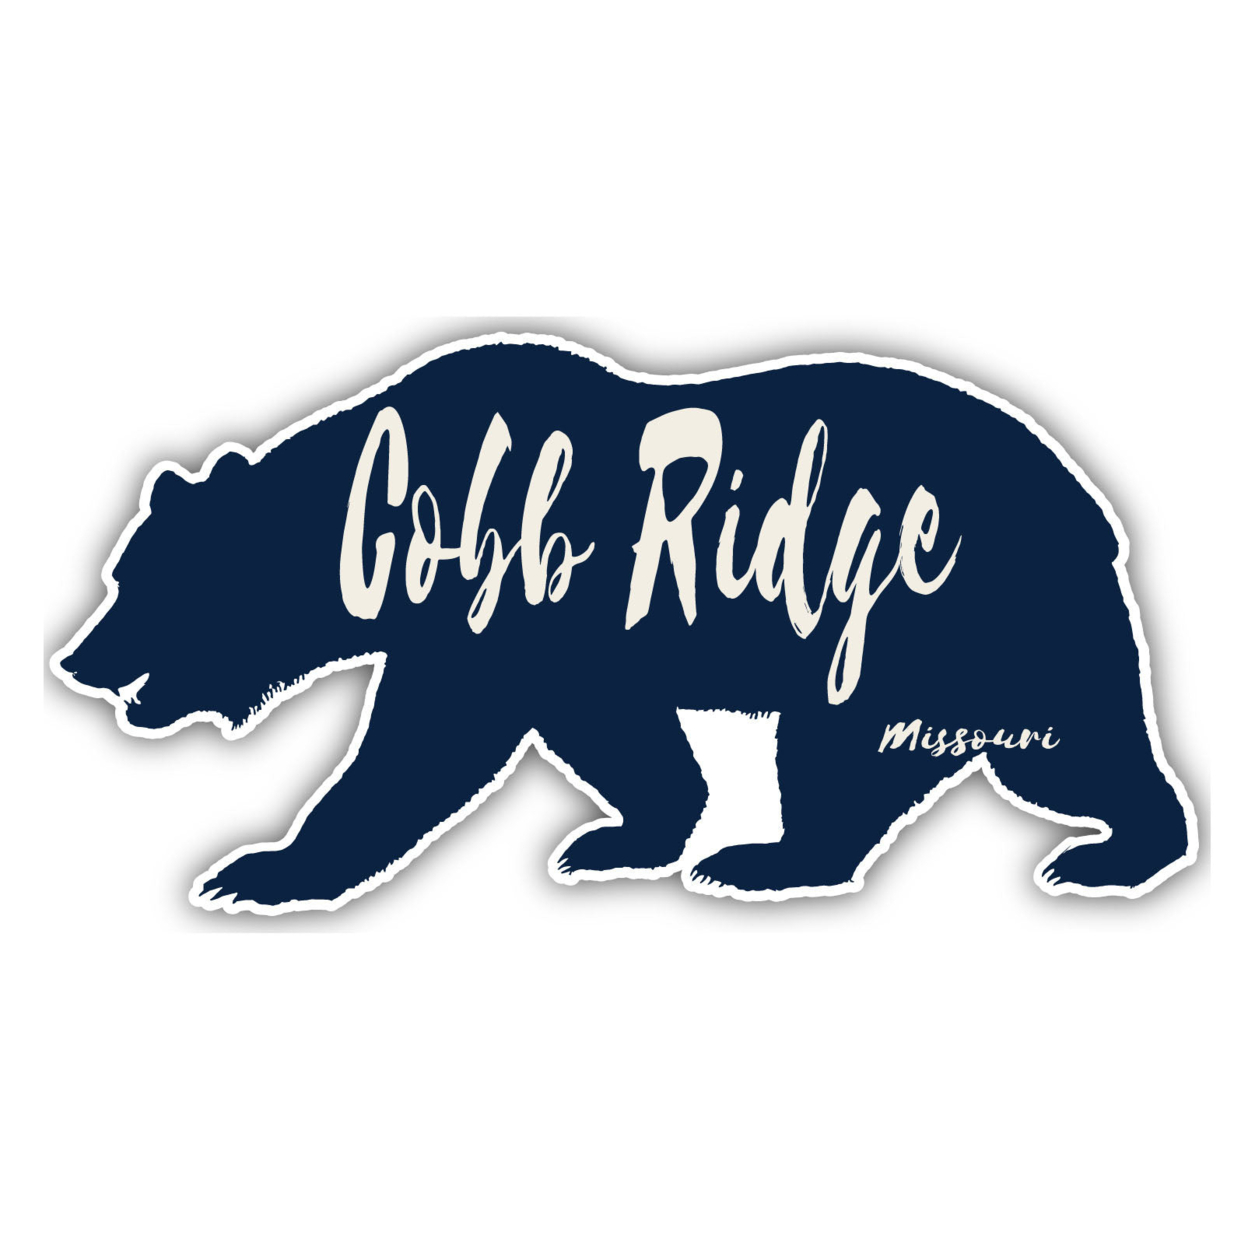 Cobb Ridge Missouri Souvenir Decorative Stickers (Choose Theme And Size) - Single Unit, 4-Inch, Bear